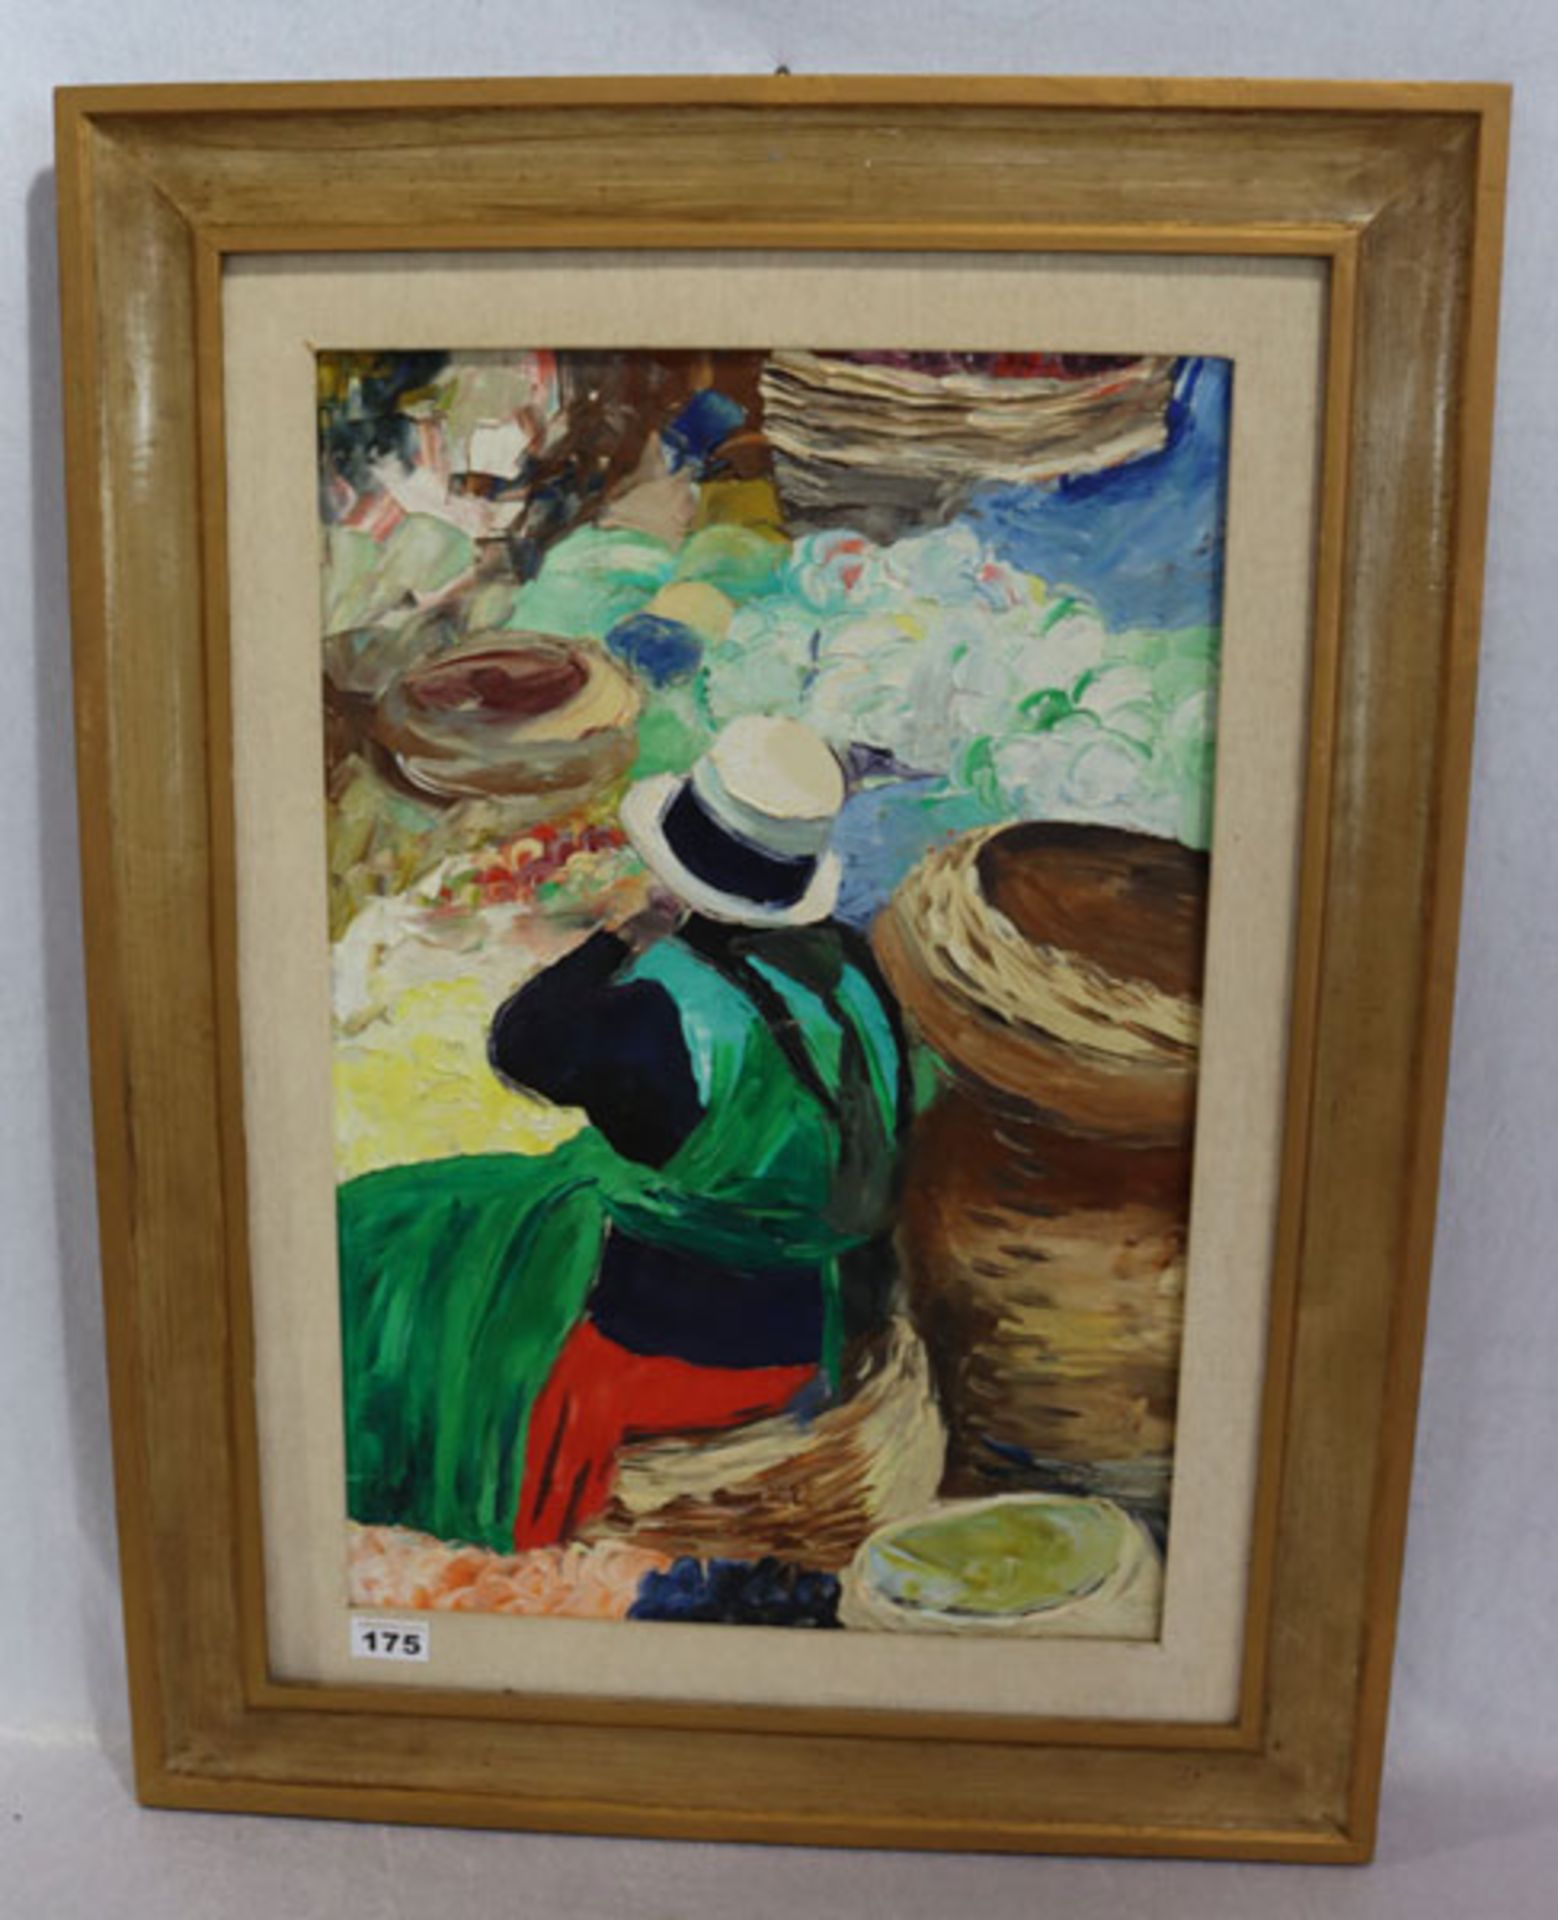 Gemälde ÖL/LW 'Markt-Szenerie', signiert Mario Berrino, * 1920 Alassio + 2011, gerahmt, incl. Rahmen